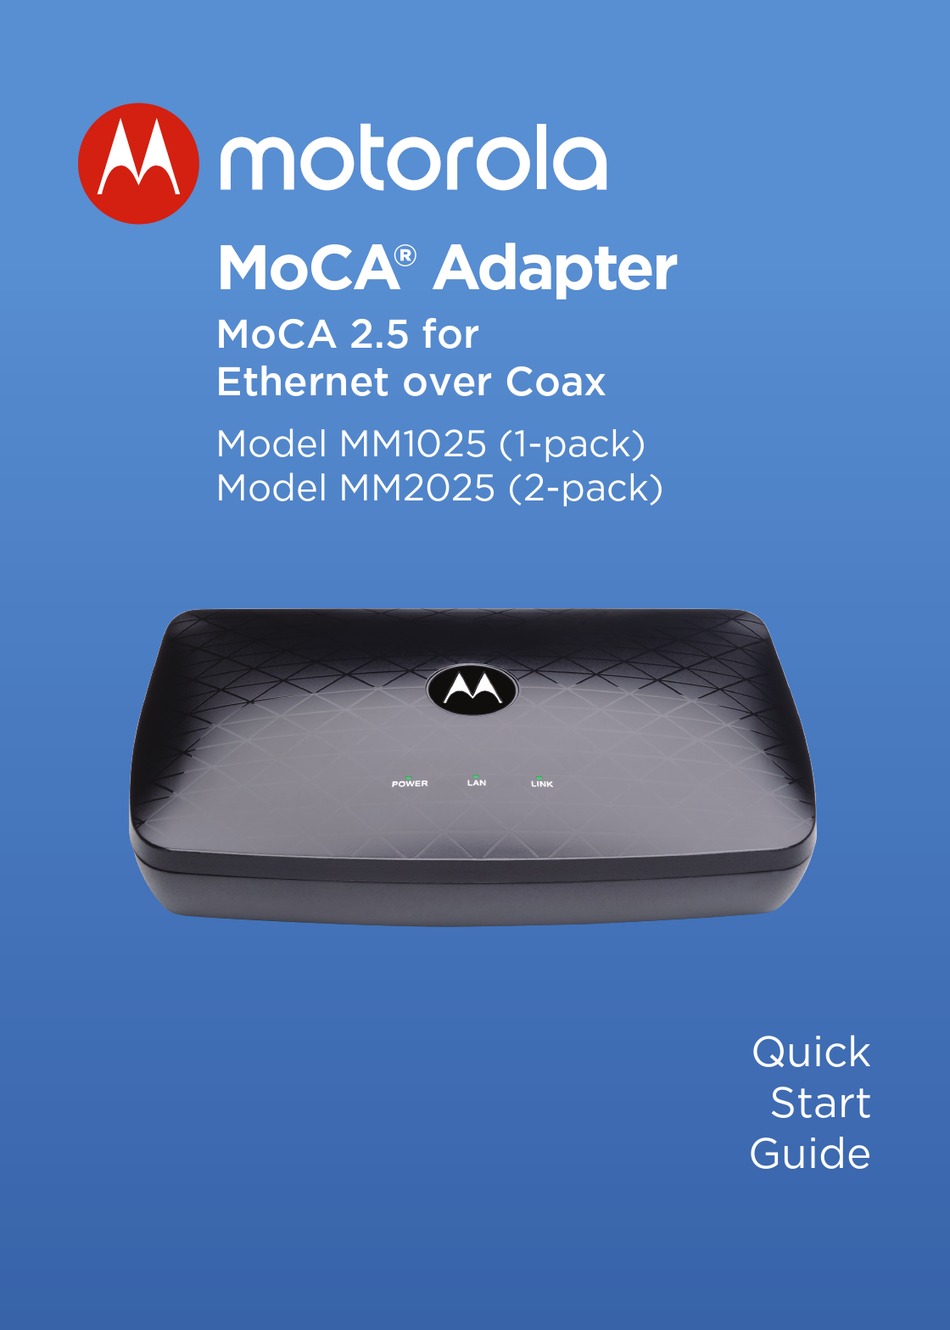 motorola moca adapter keeps disconnecting